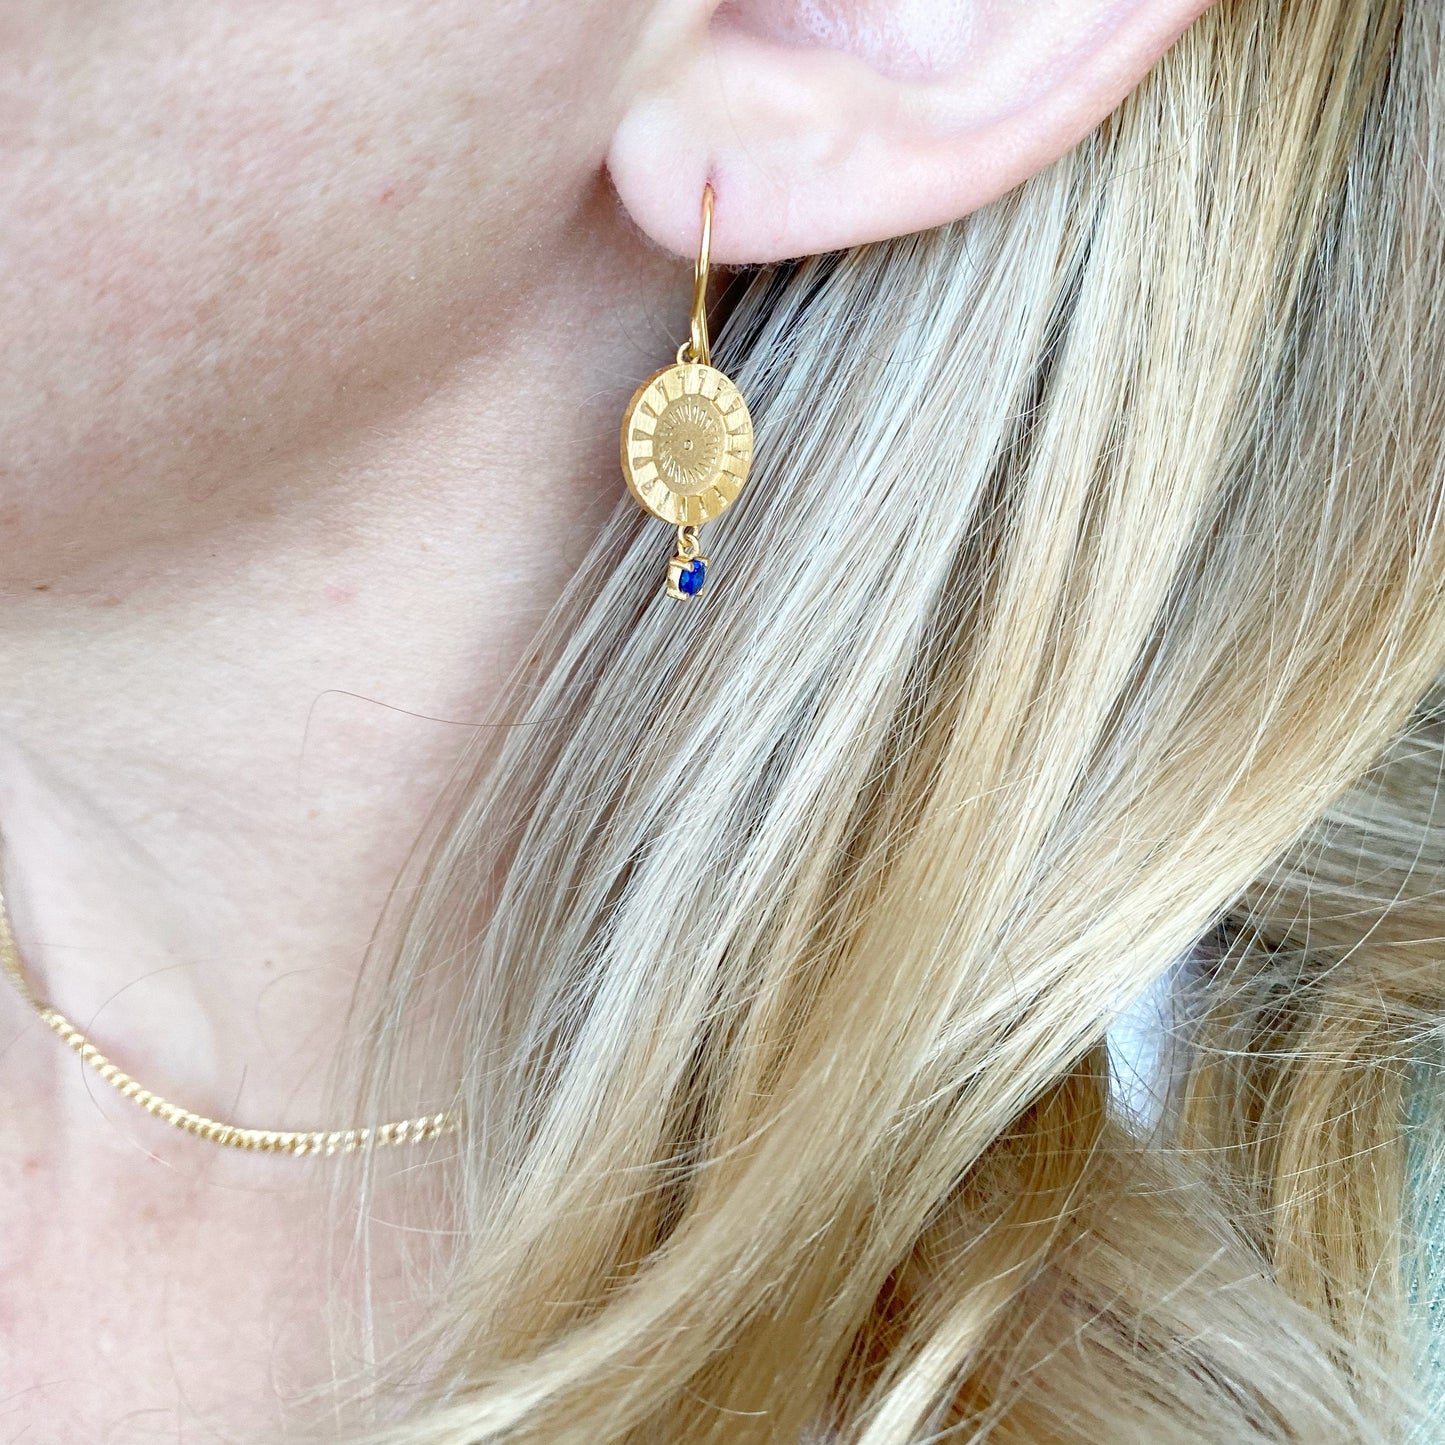 GoldFi 18k Gold Filled Coin Charm Sapphire Earrings